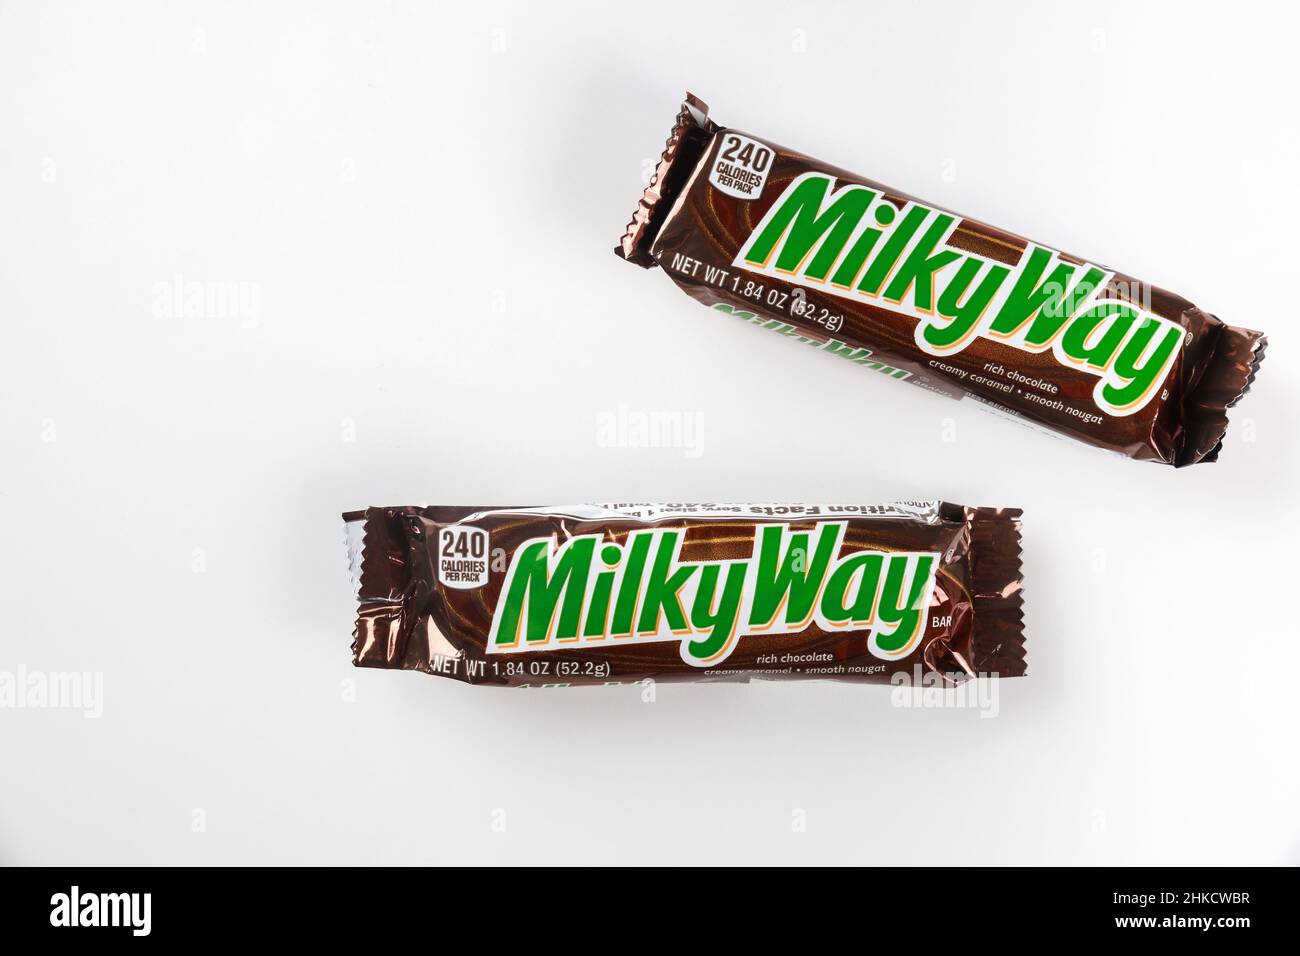 MILKY WAY Milk Chocolate Single Candy Bar, 1.84 oz